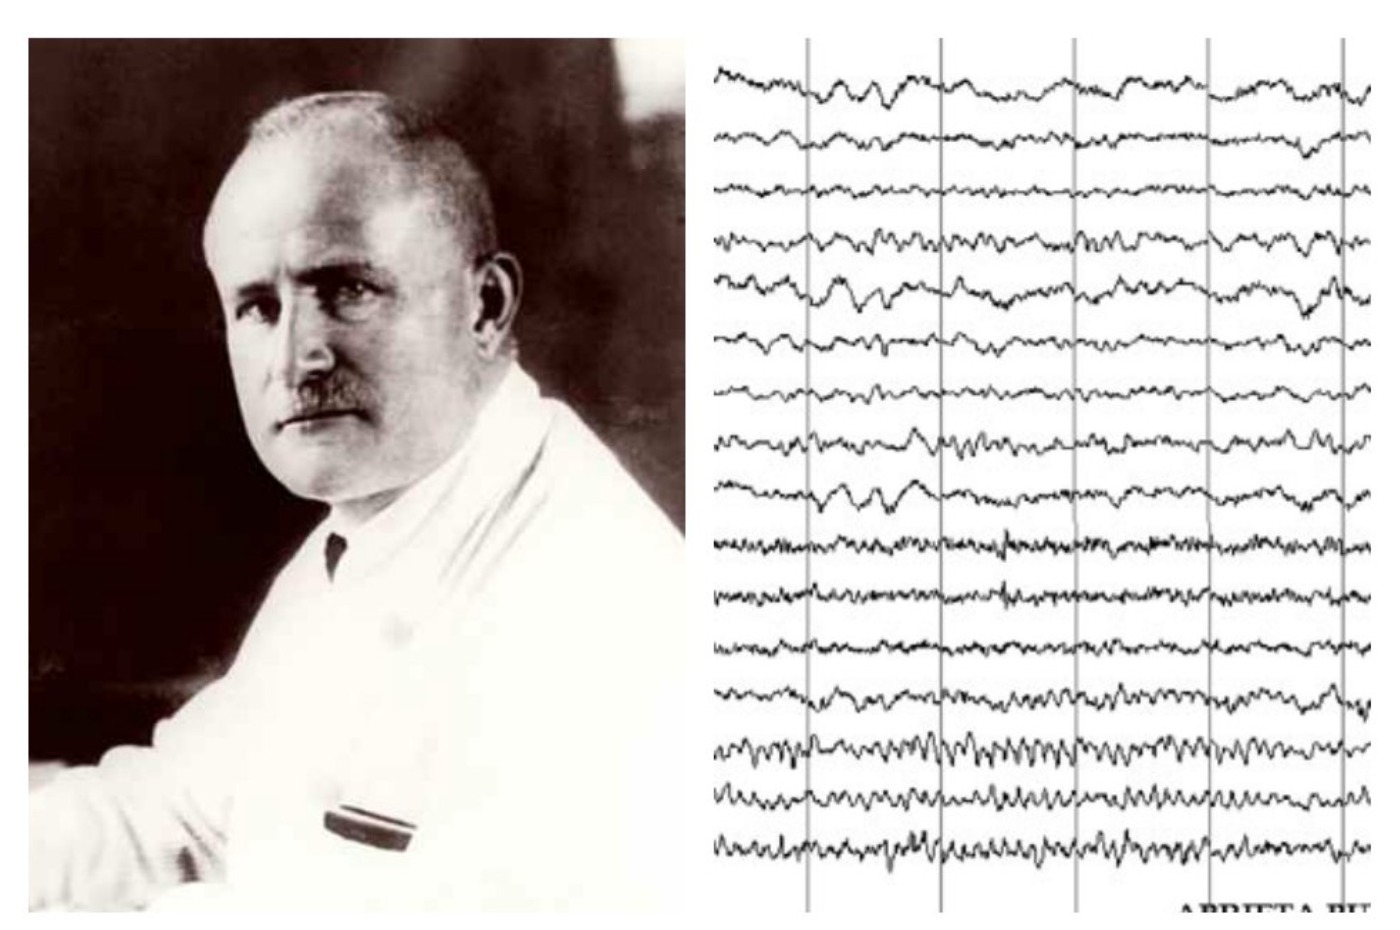 hans berger electroencefalograma neurologic international